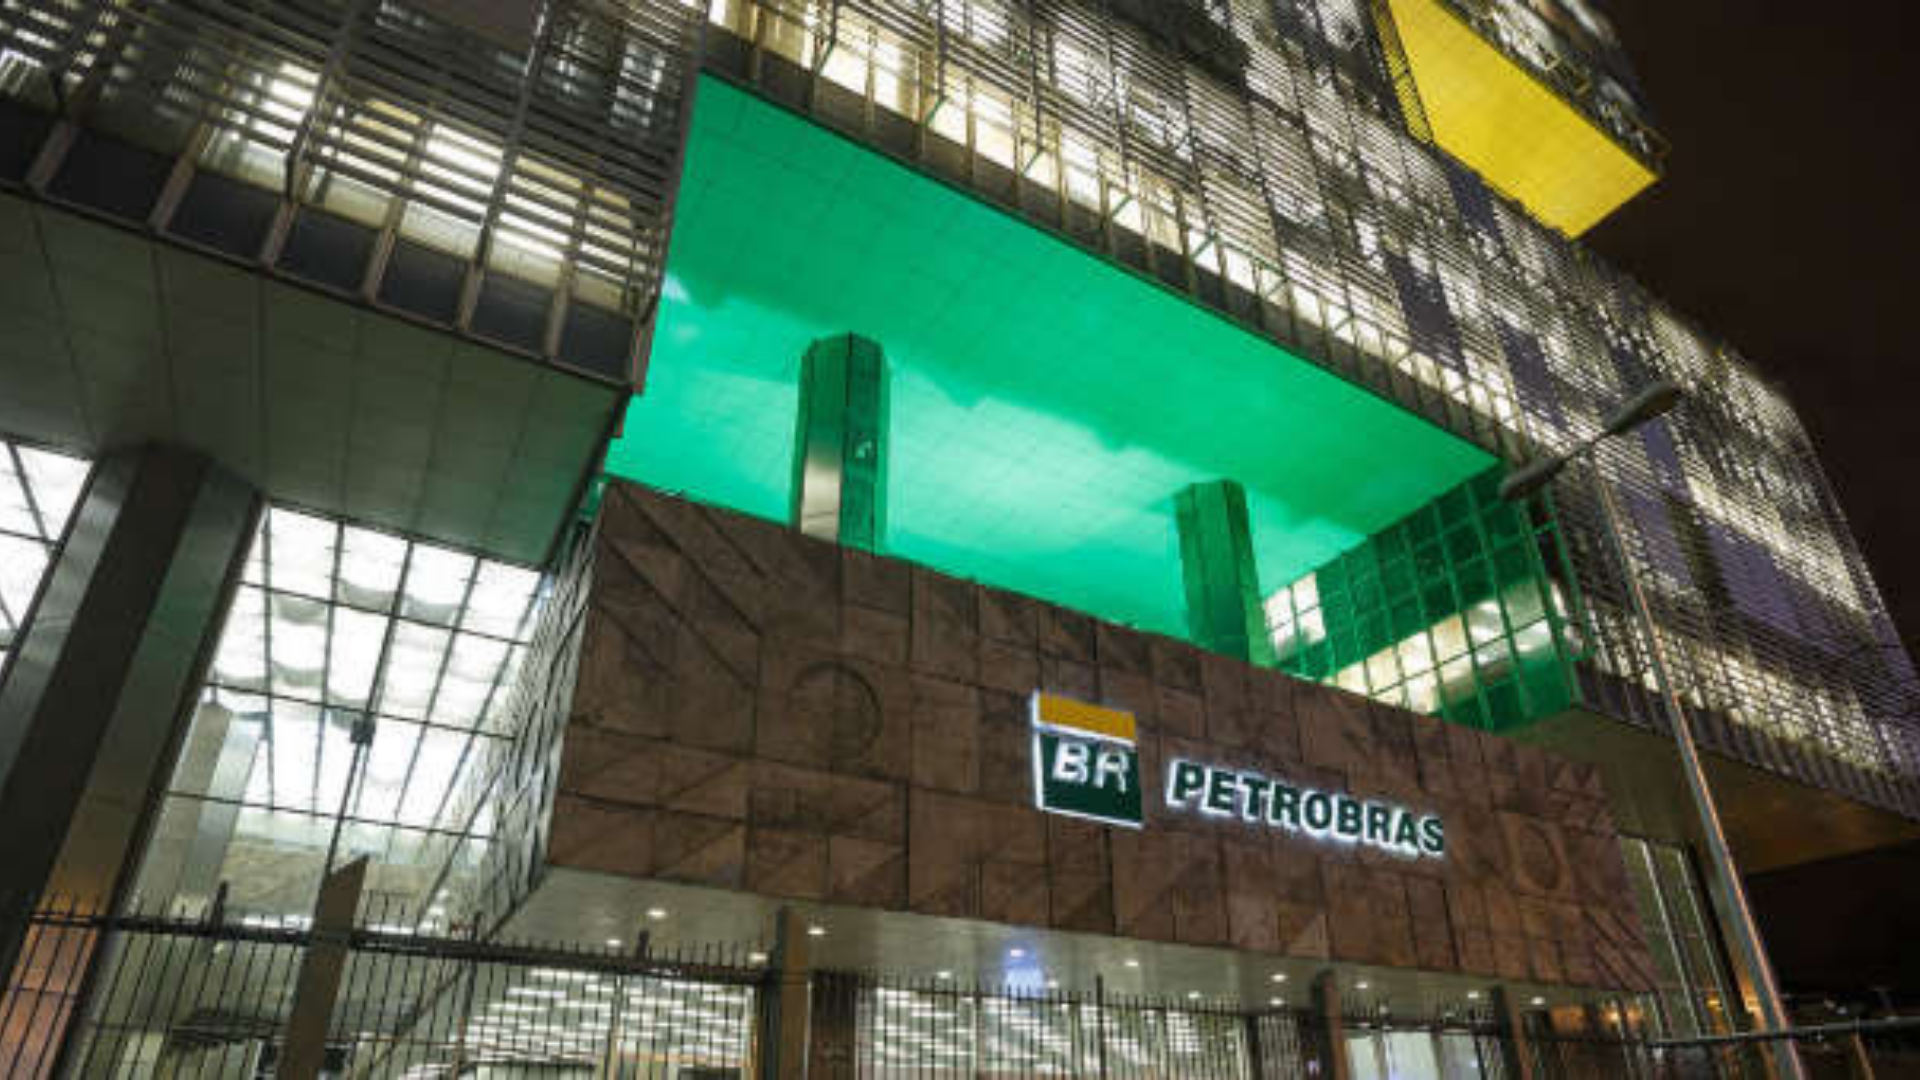 Petrobras – petrochemicals – Braskem